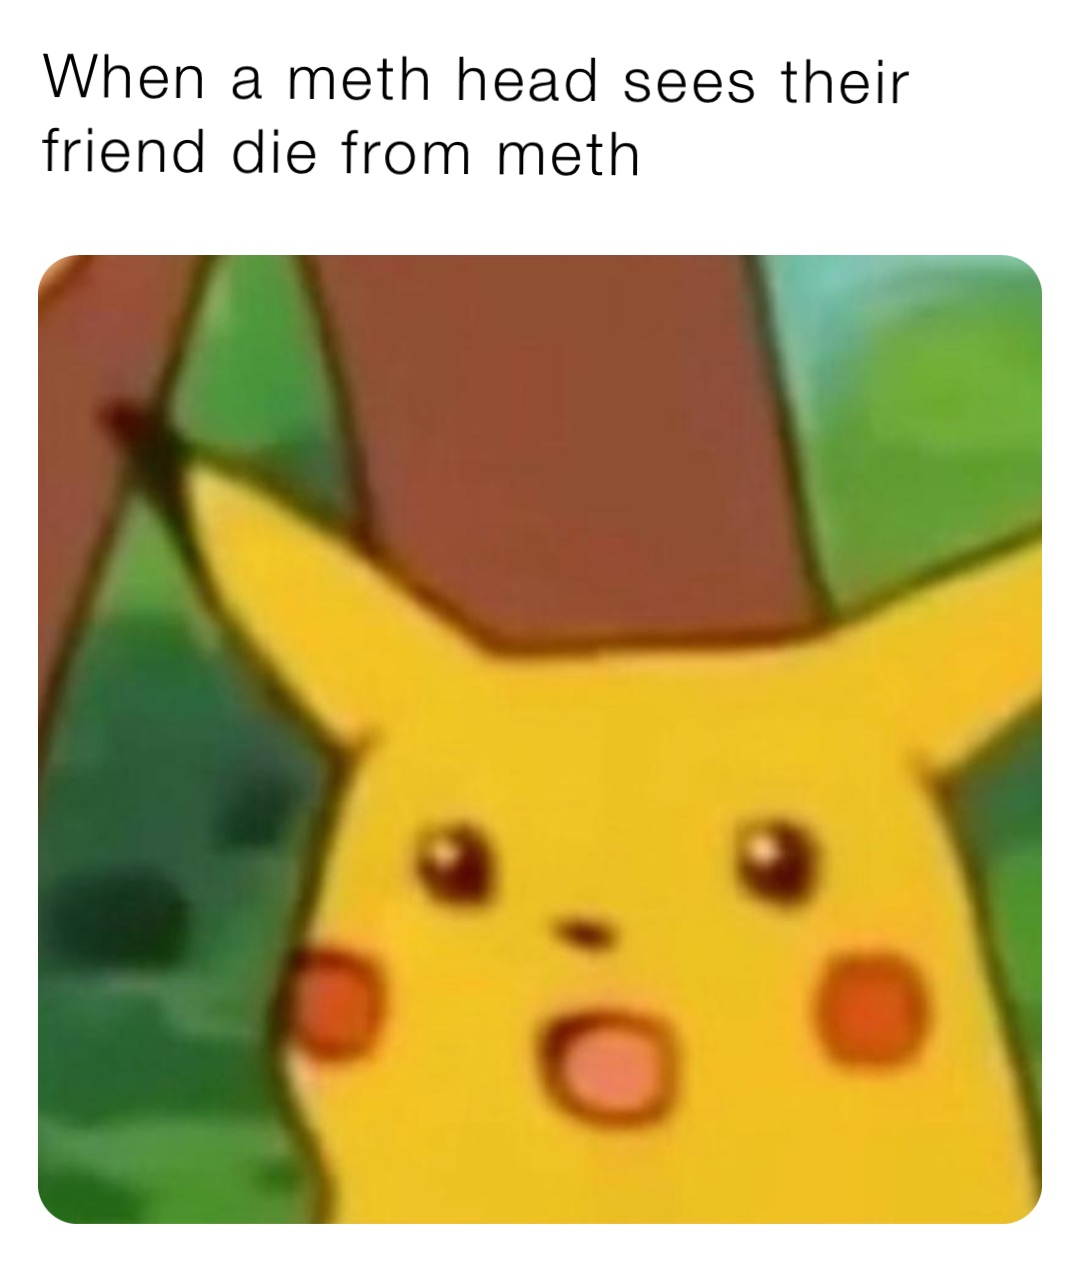 When a meth head sees their friend die from meth